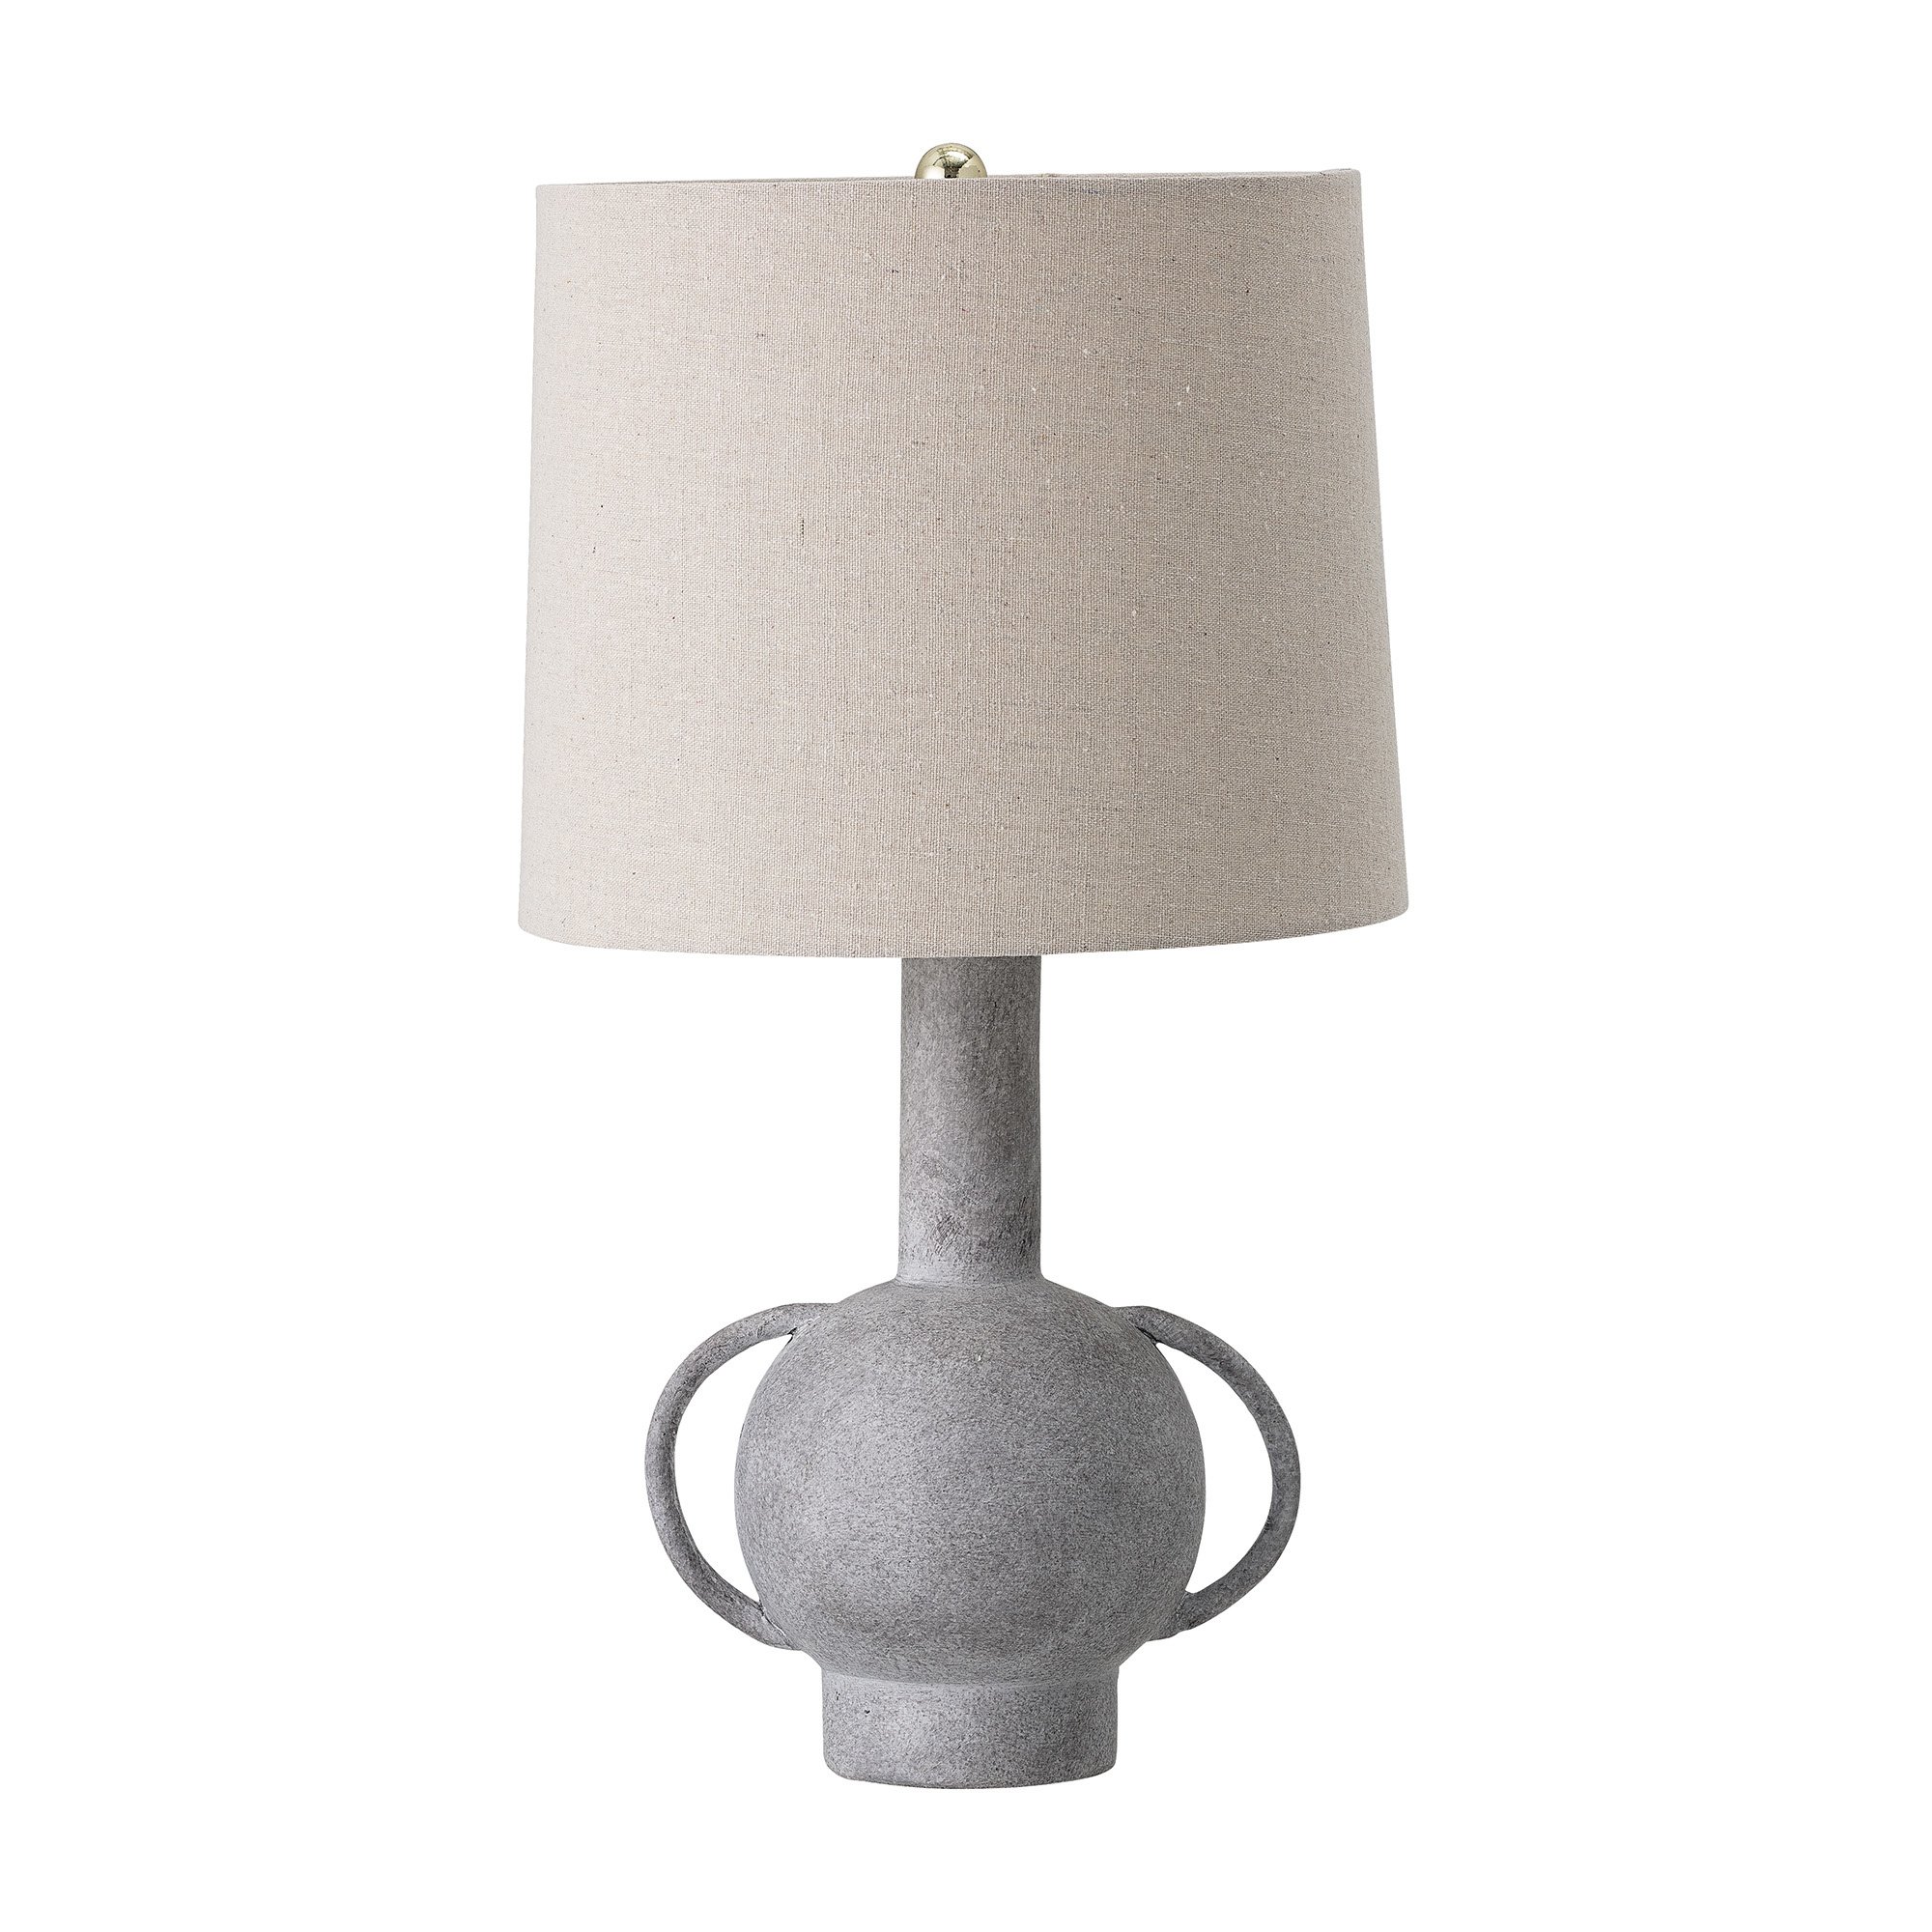 Bloomingville Table Lamp Terracotta, Terracotta Table Lamp